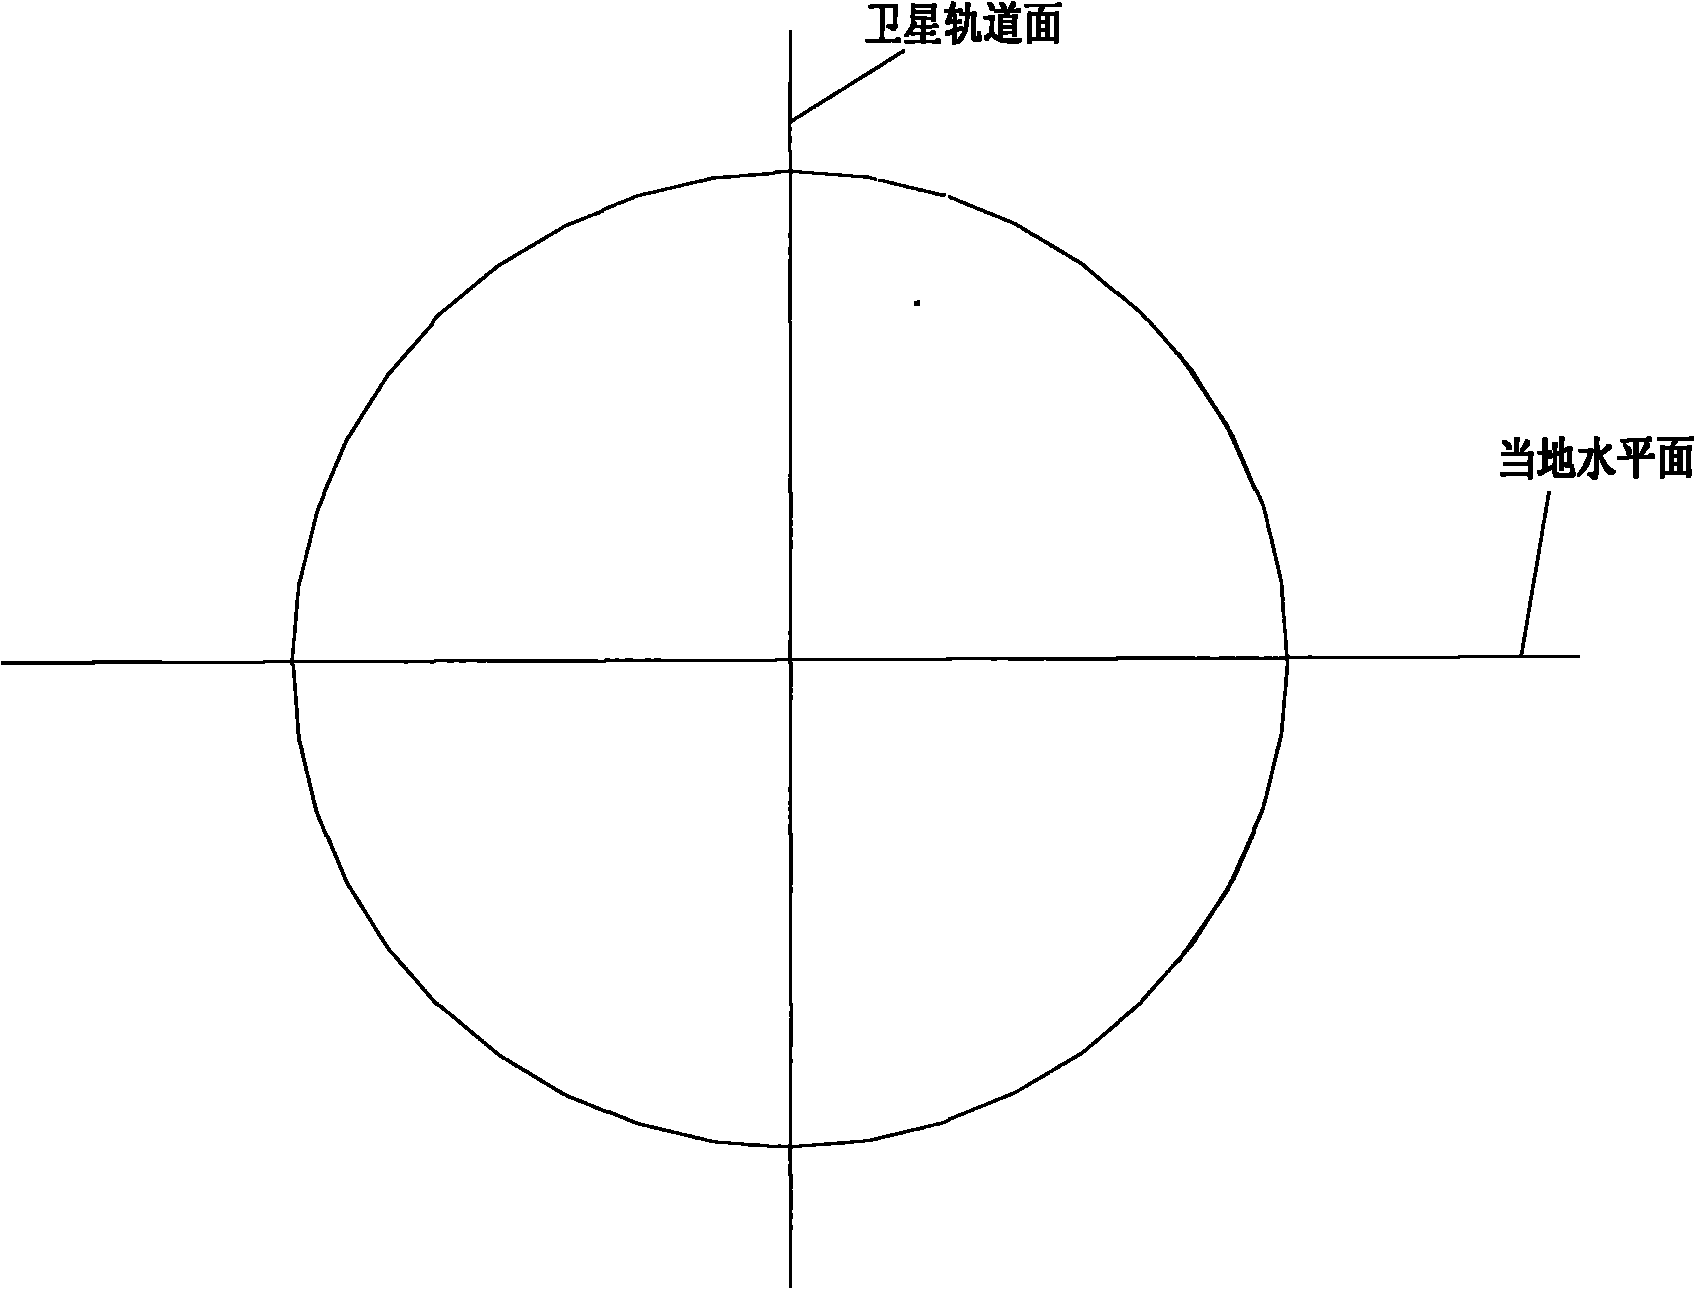 Method for configuration of star sensor head